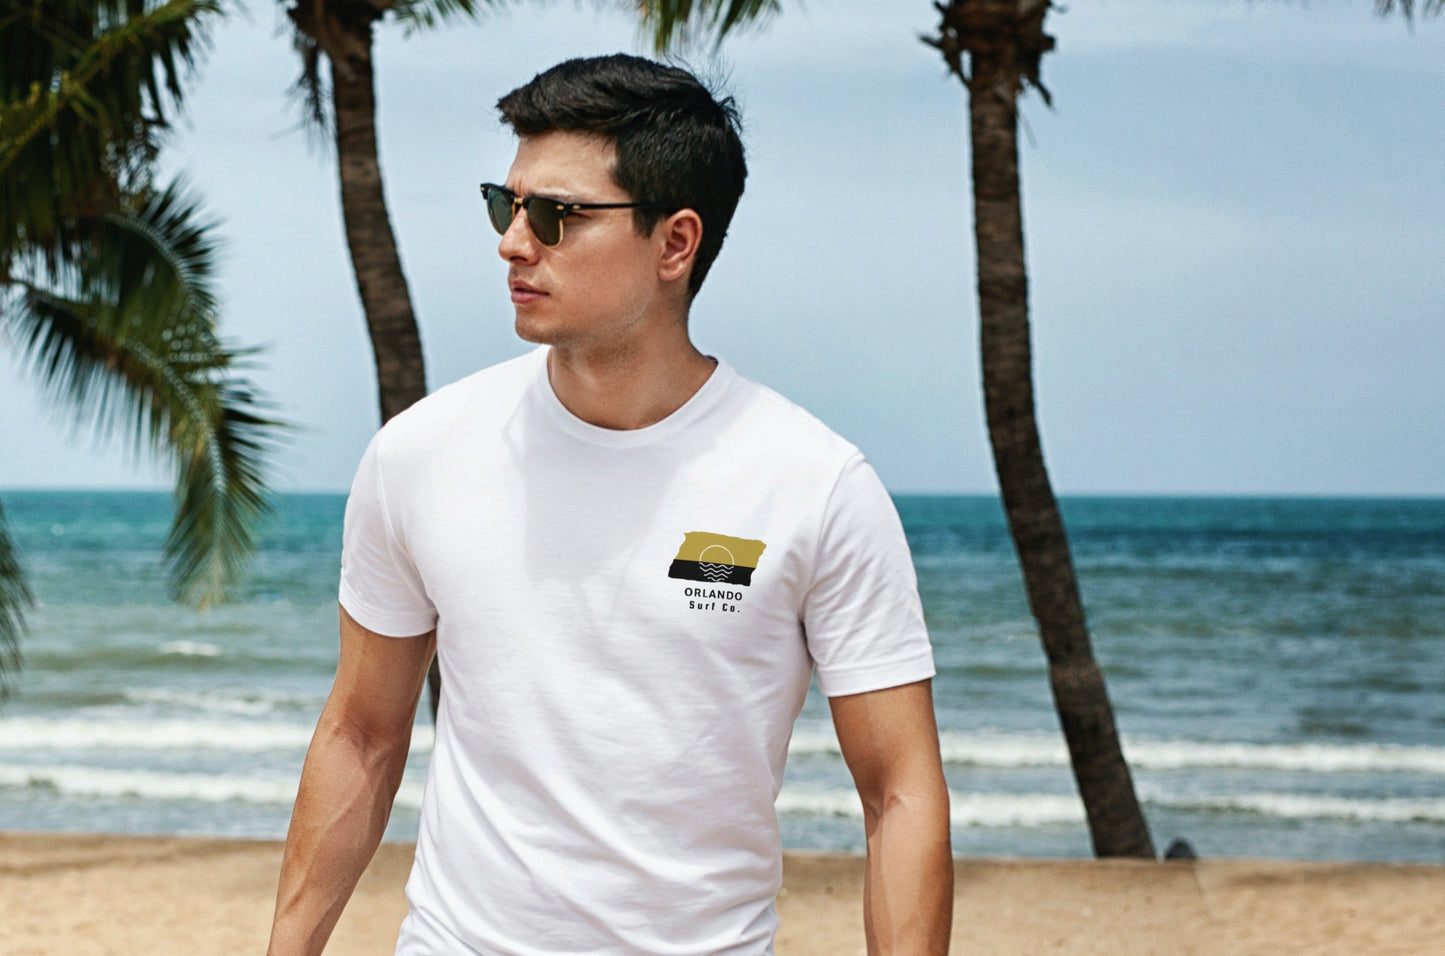 Orlando Surf Co. White Surfboard Shirt